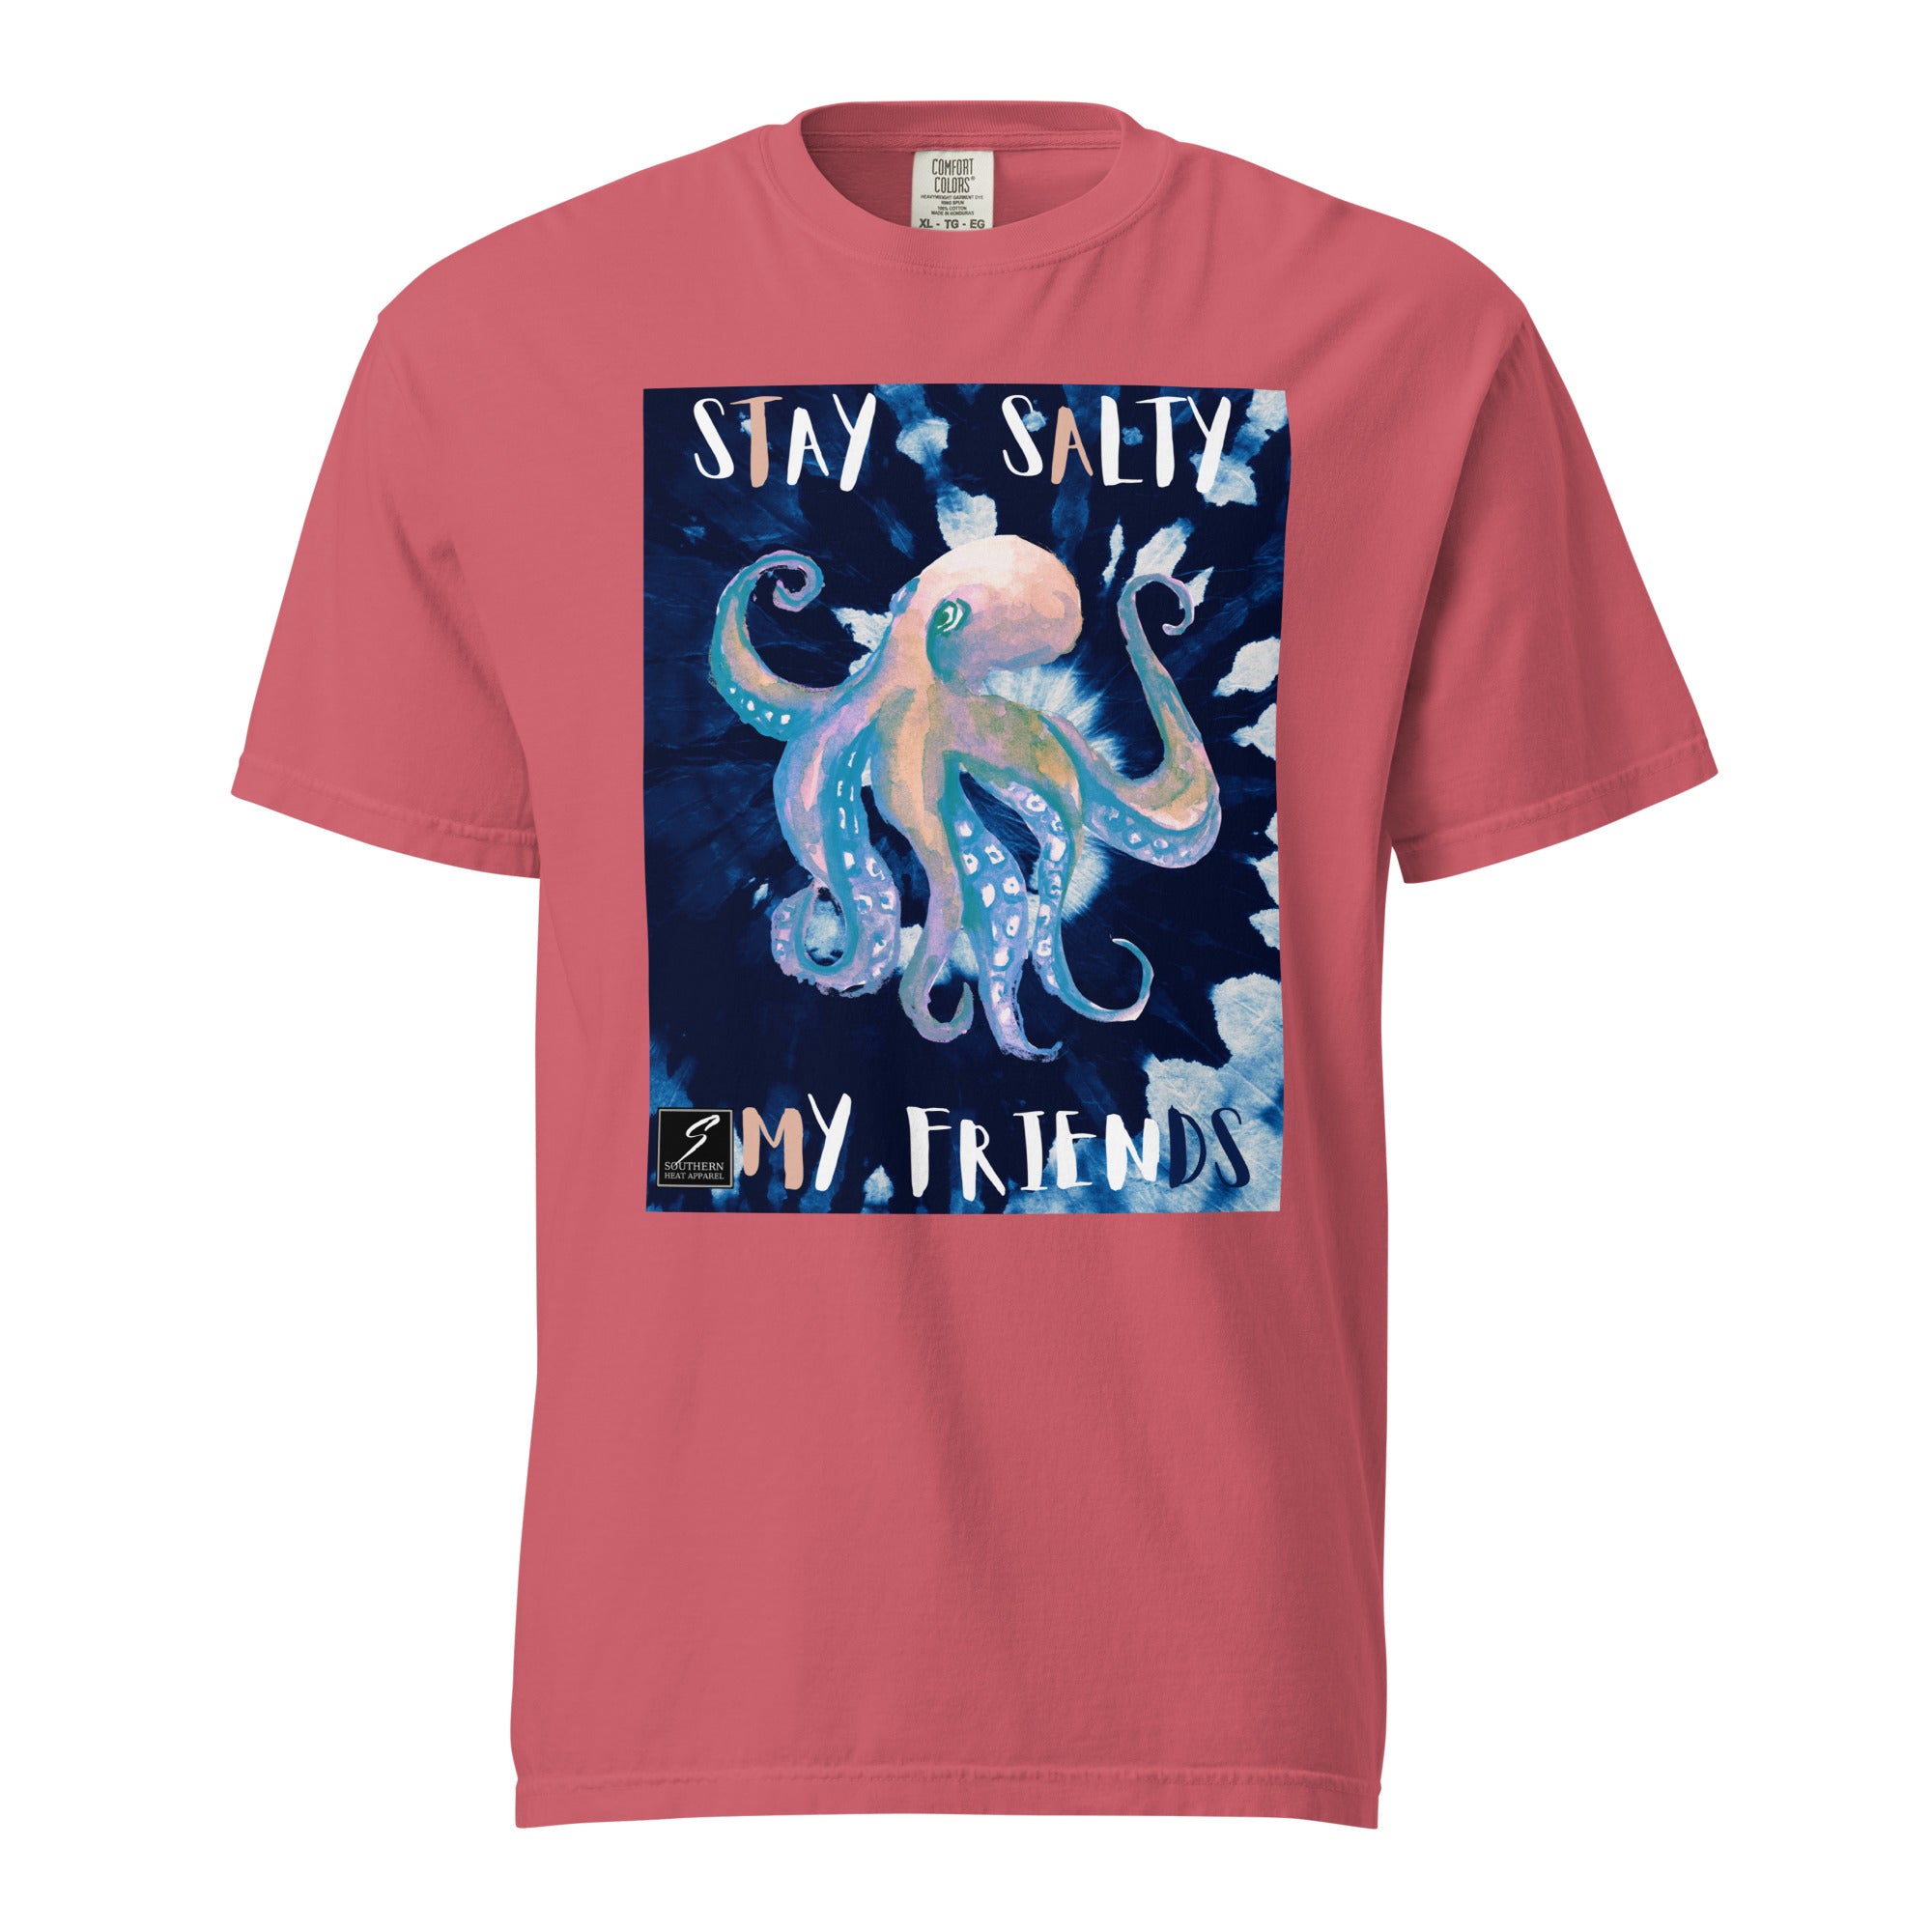 Stay salty-Men's garment-dyed heavyweight t-shirt